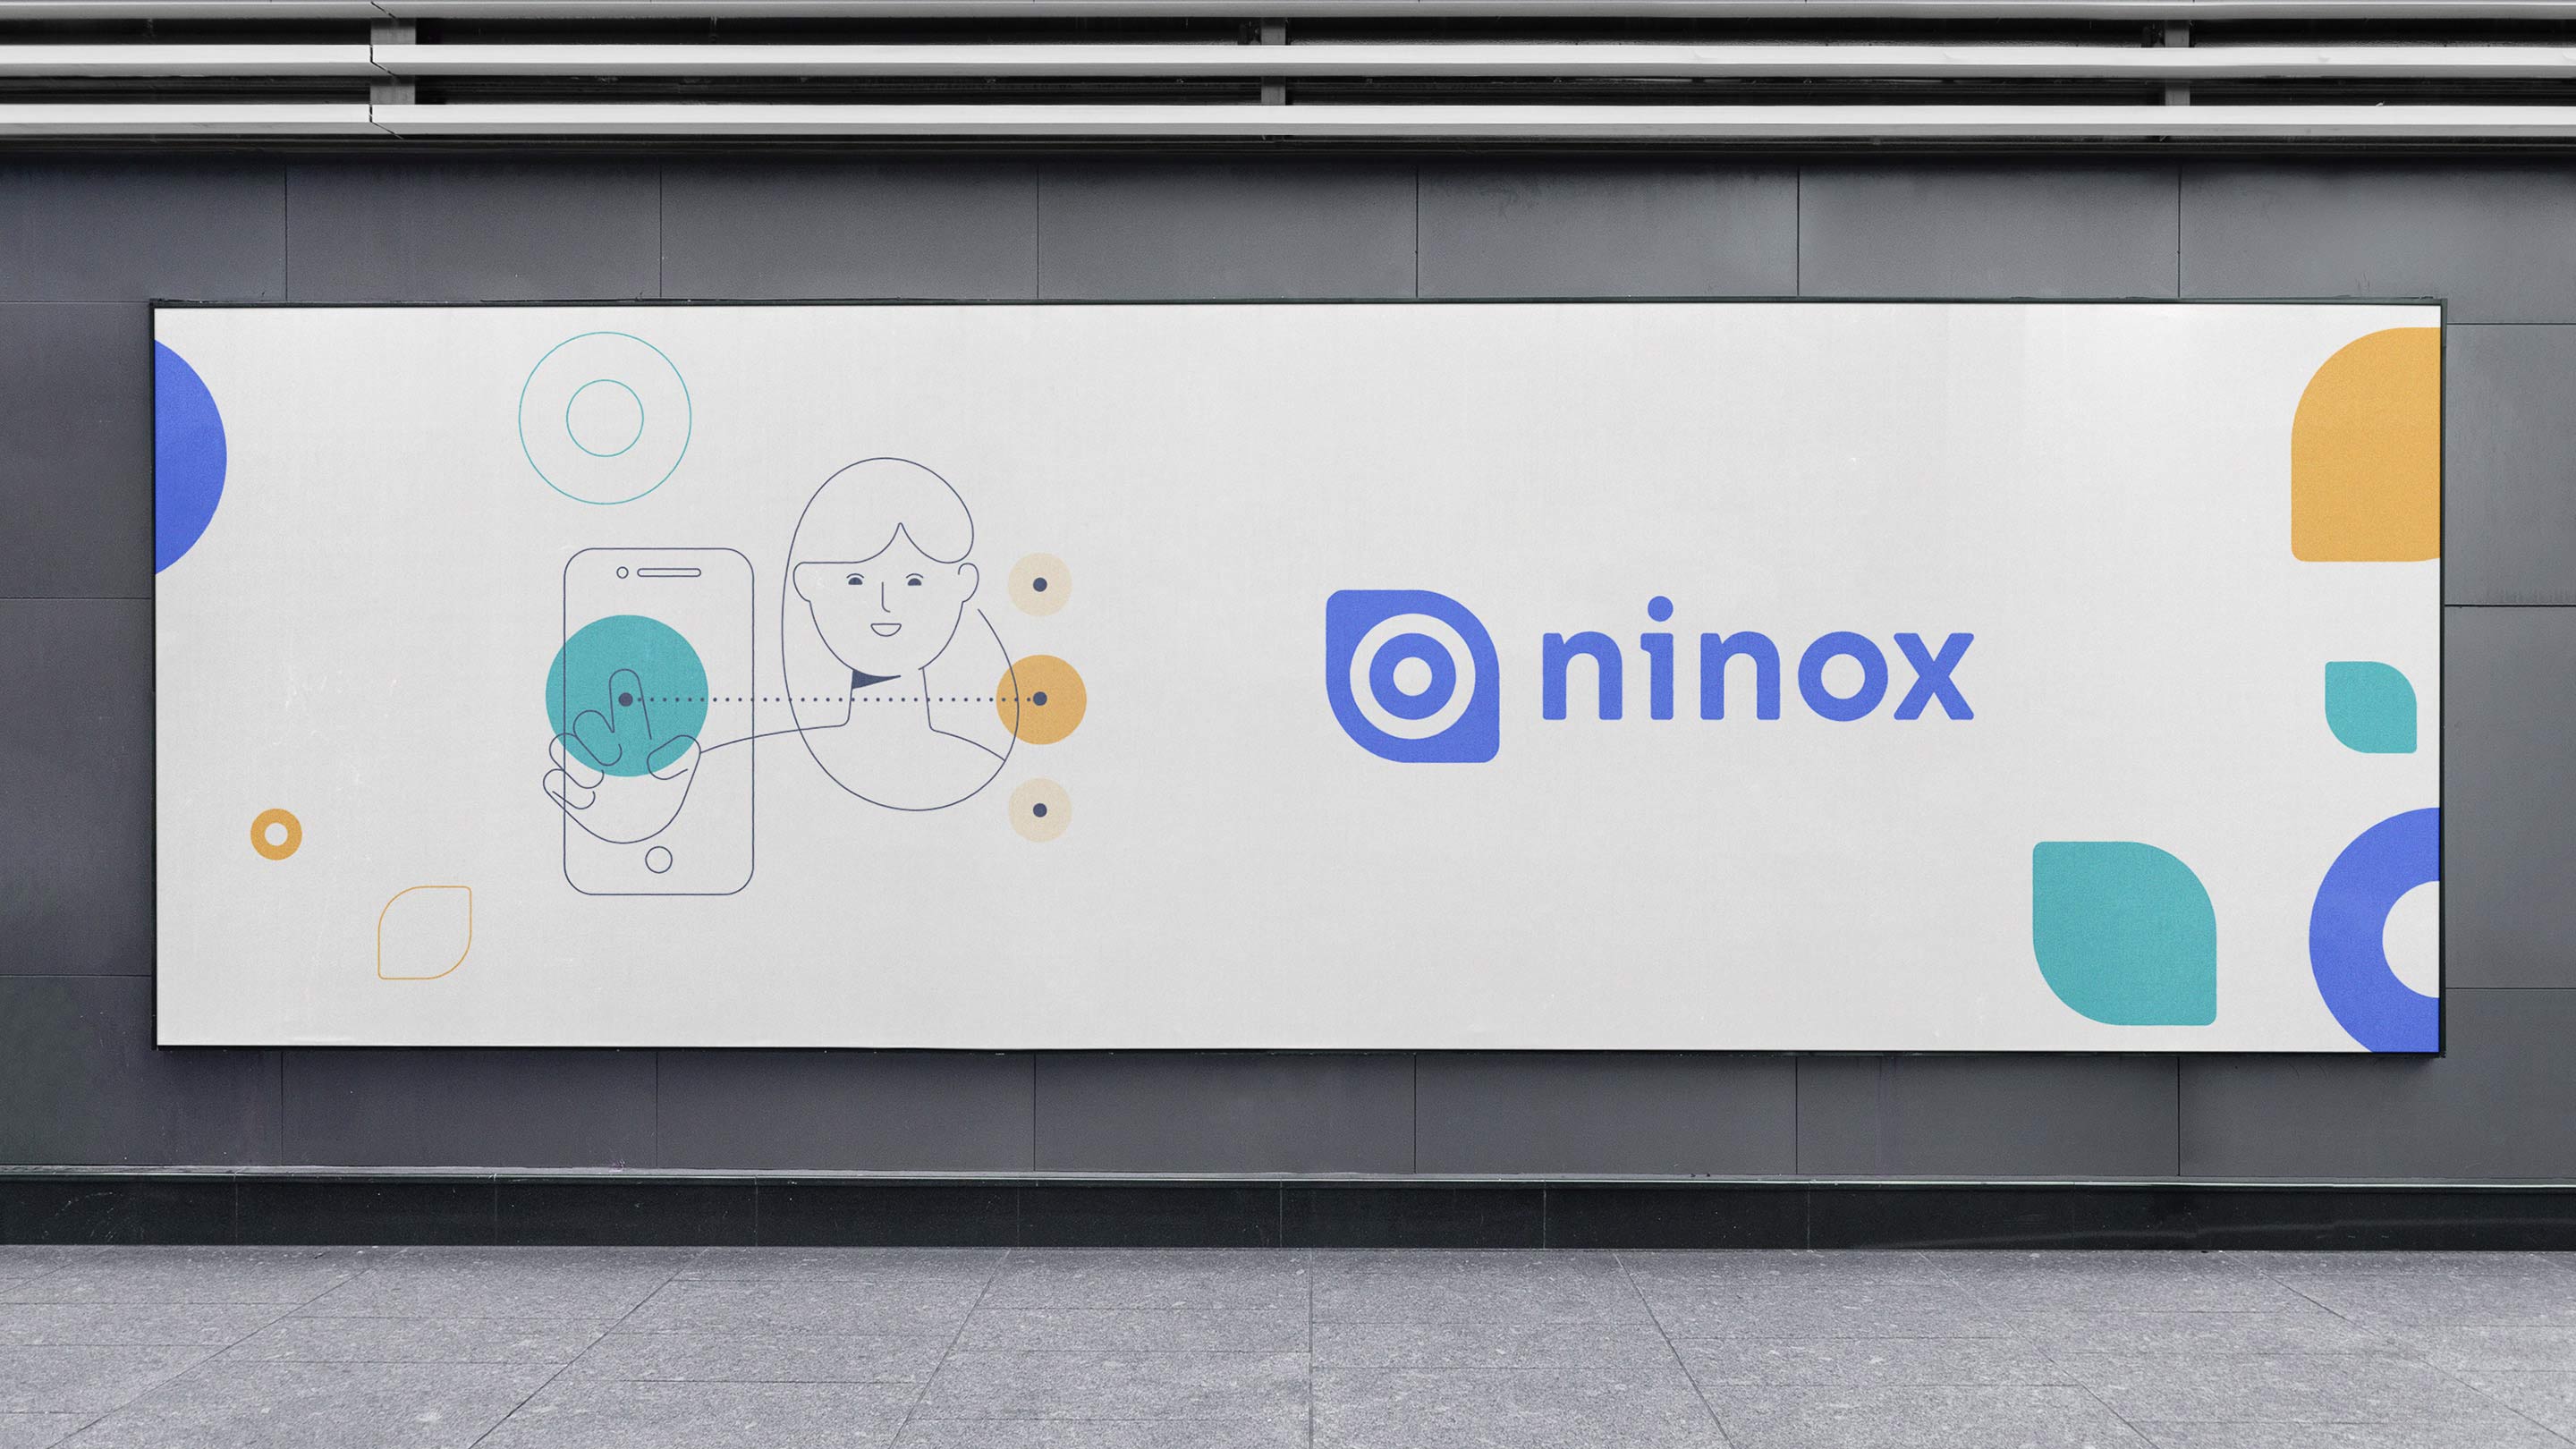 ninox branded wall